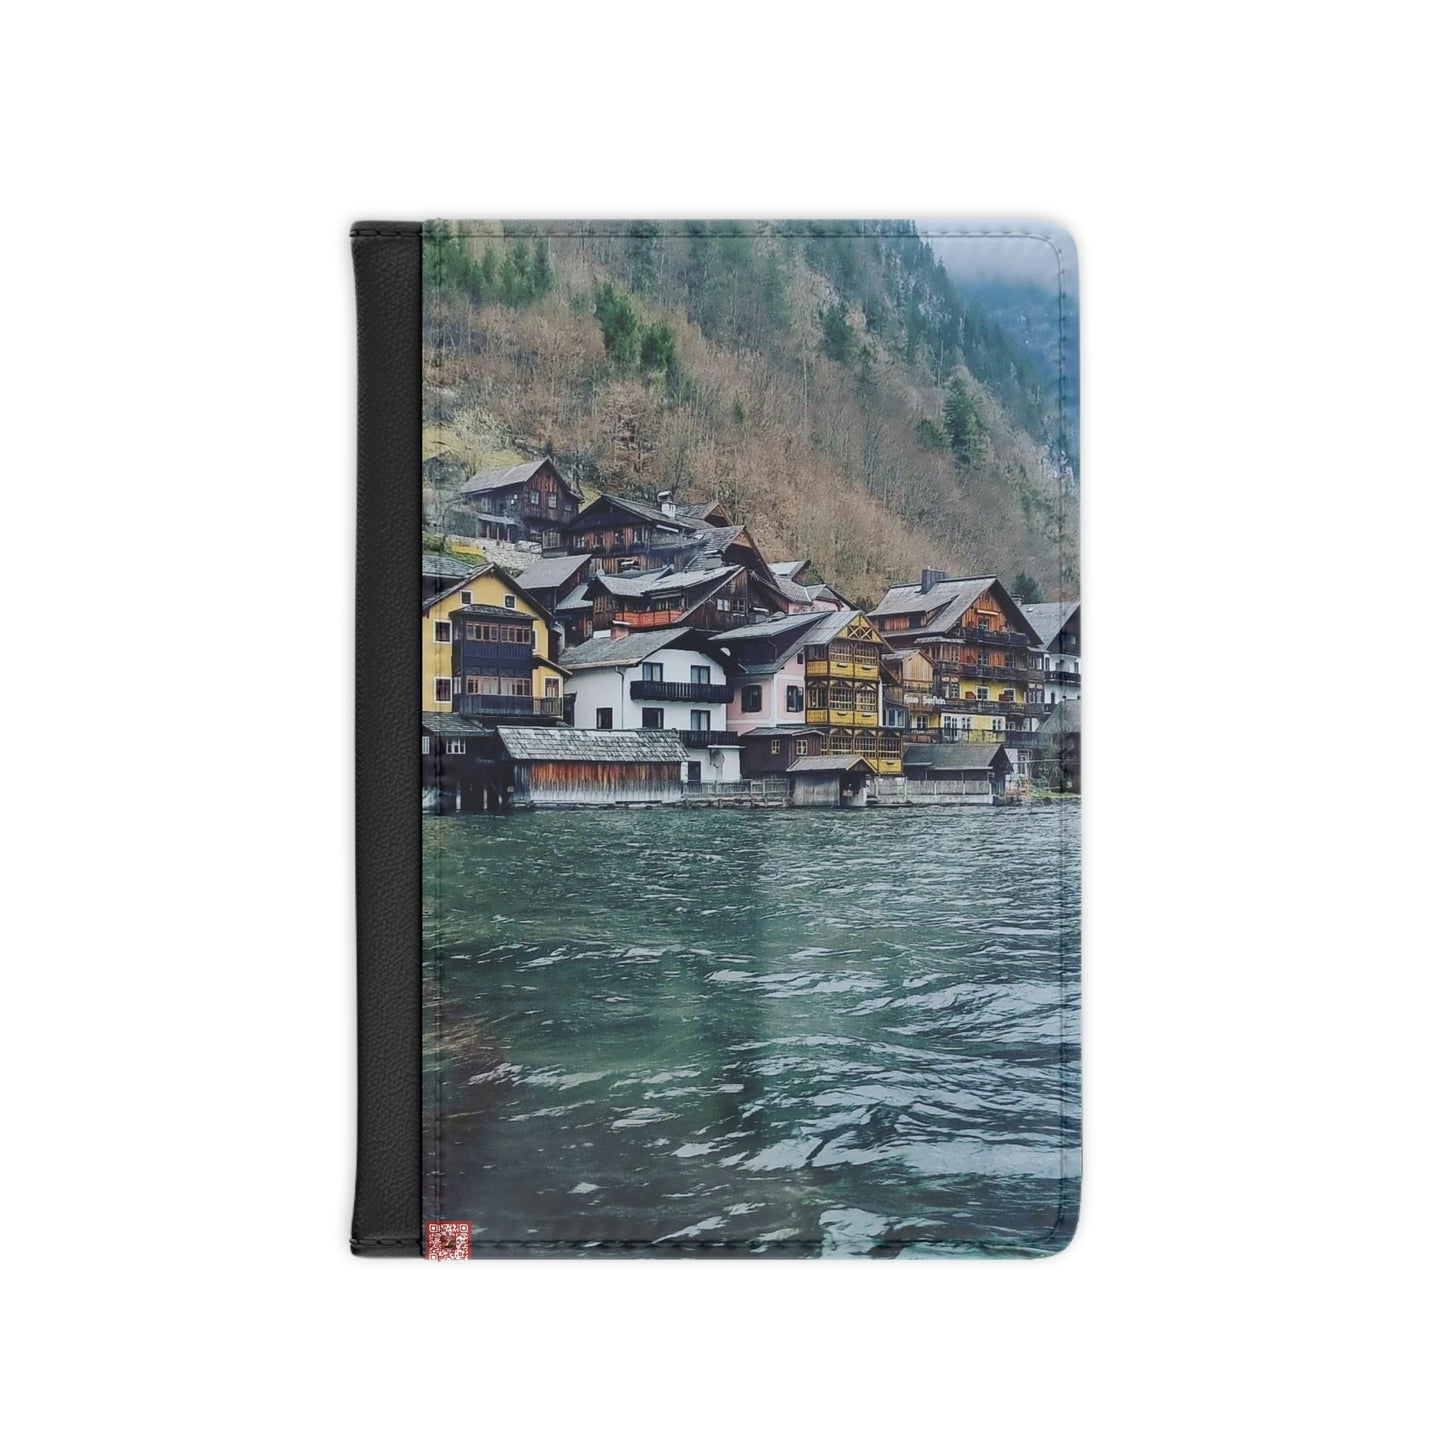 Hallstatt | Austria | Passport Cover